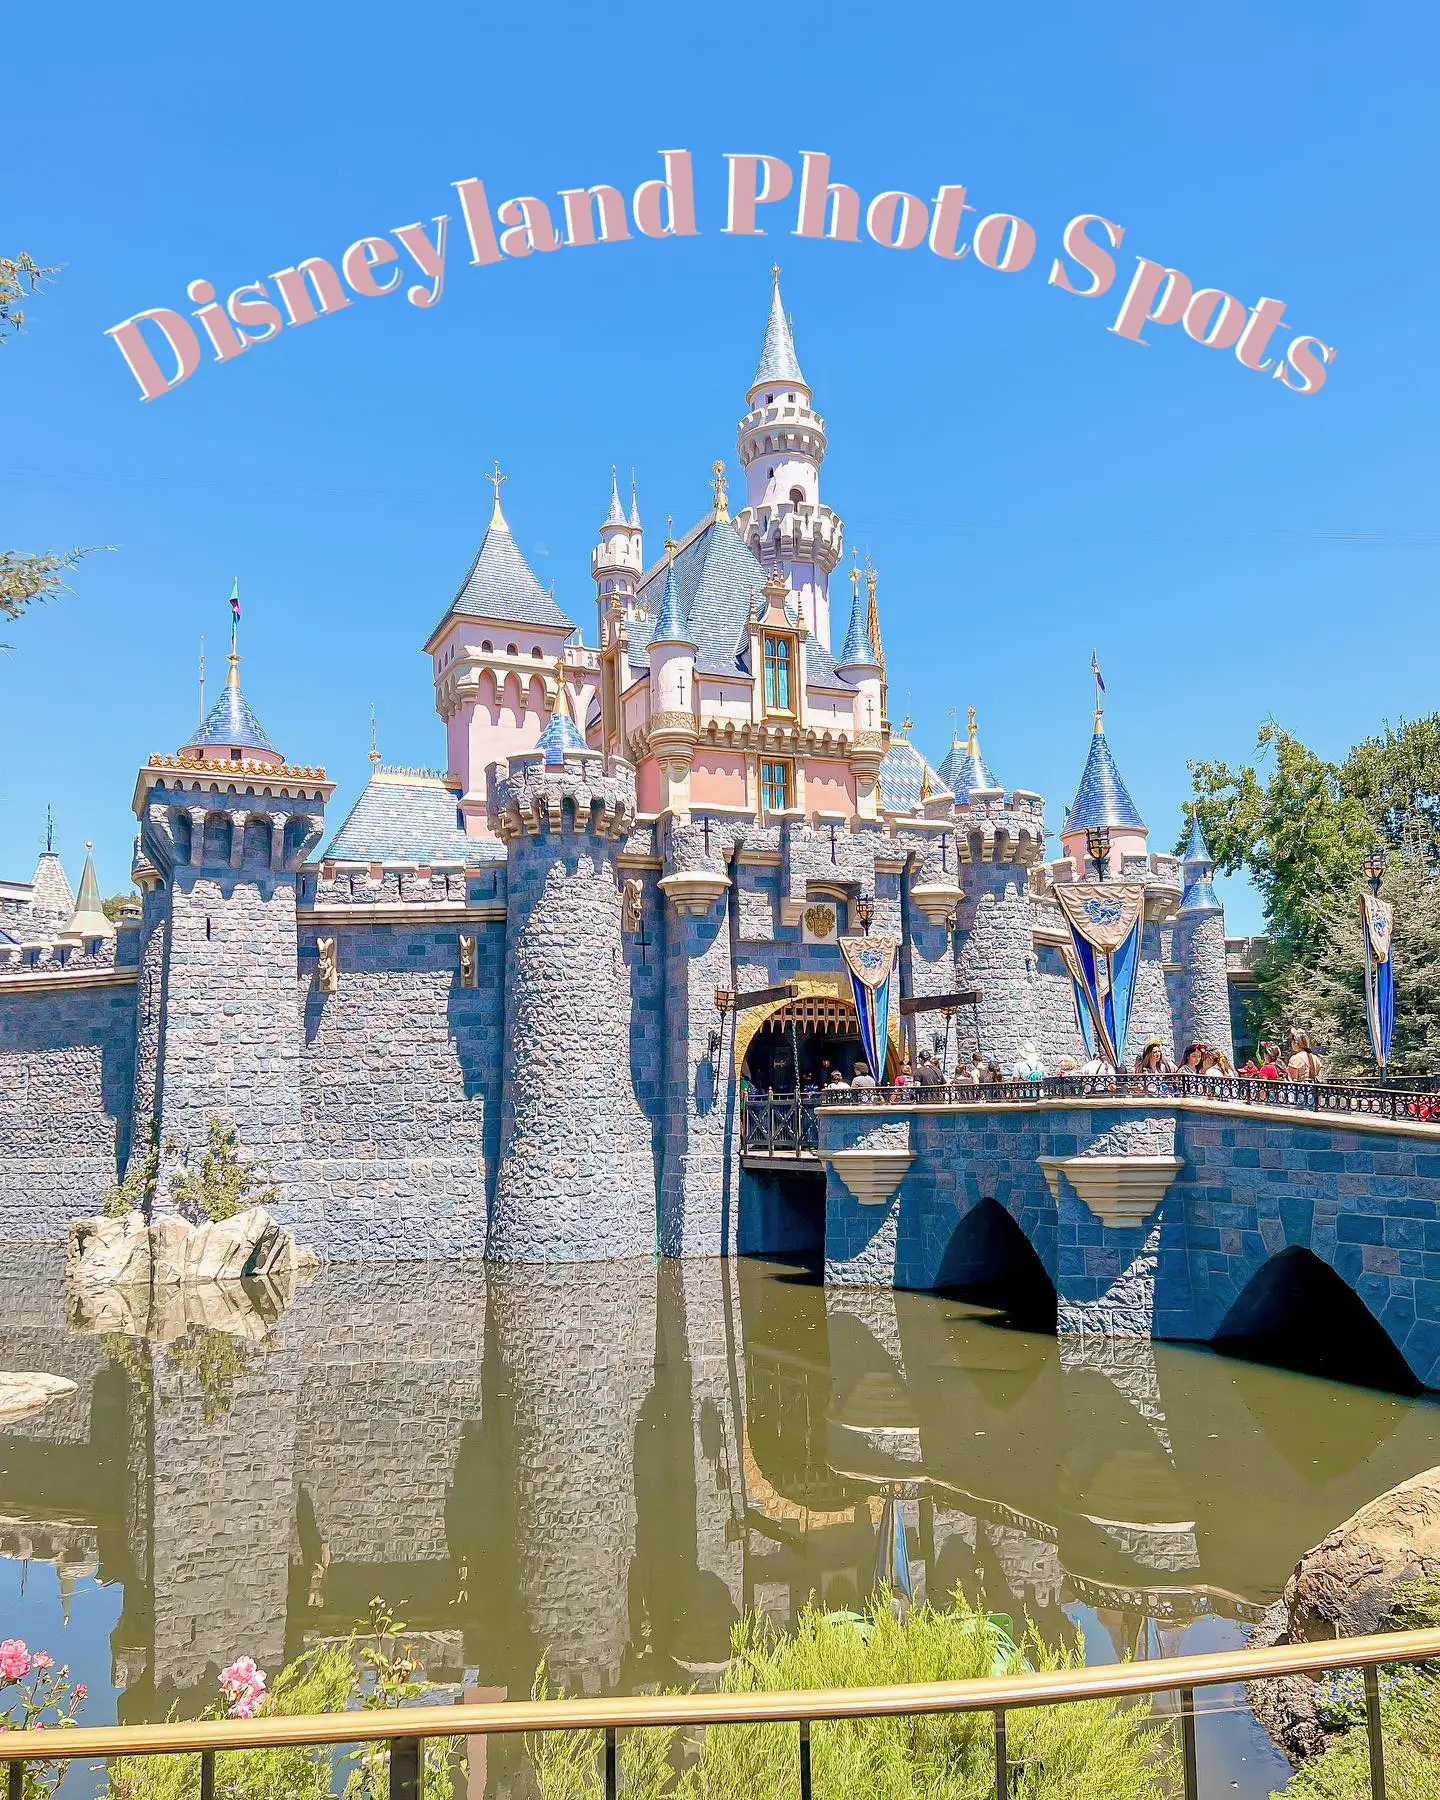 Disneyland Photo Spots✨🌸's images